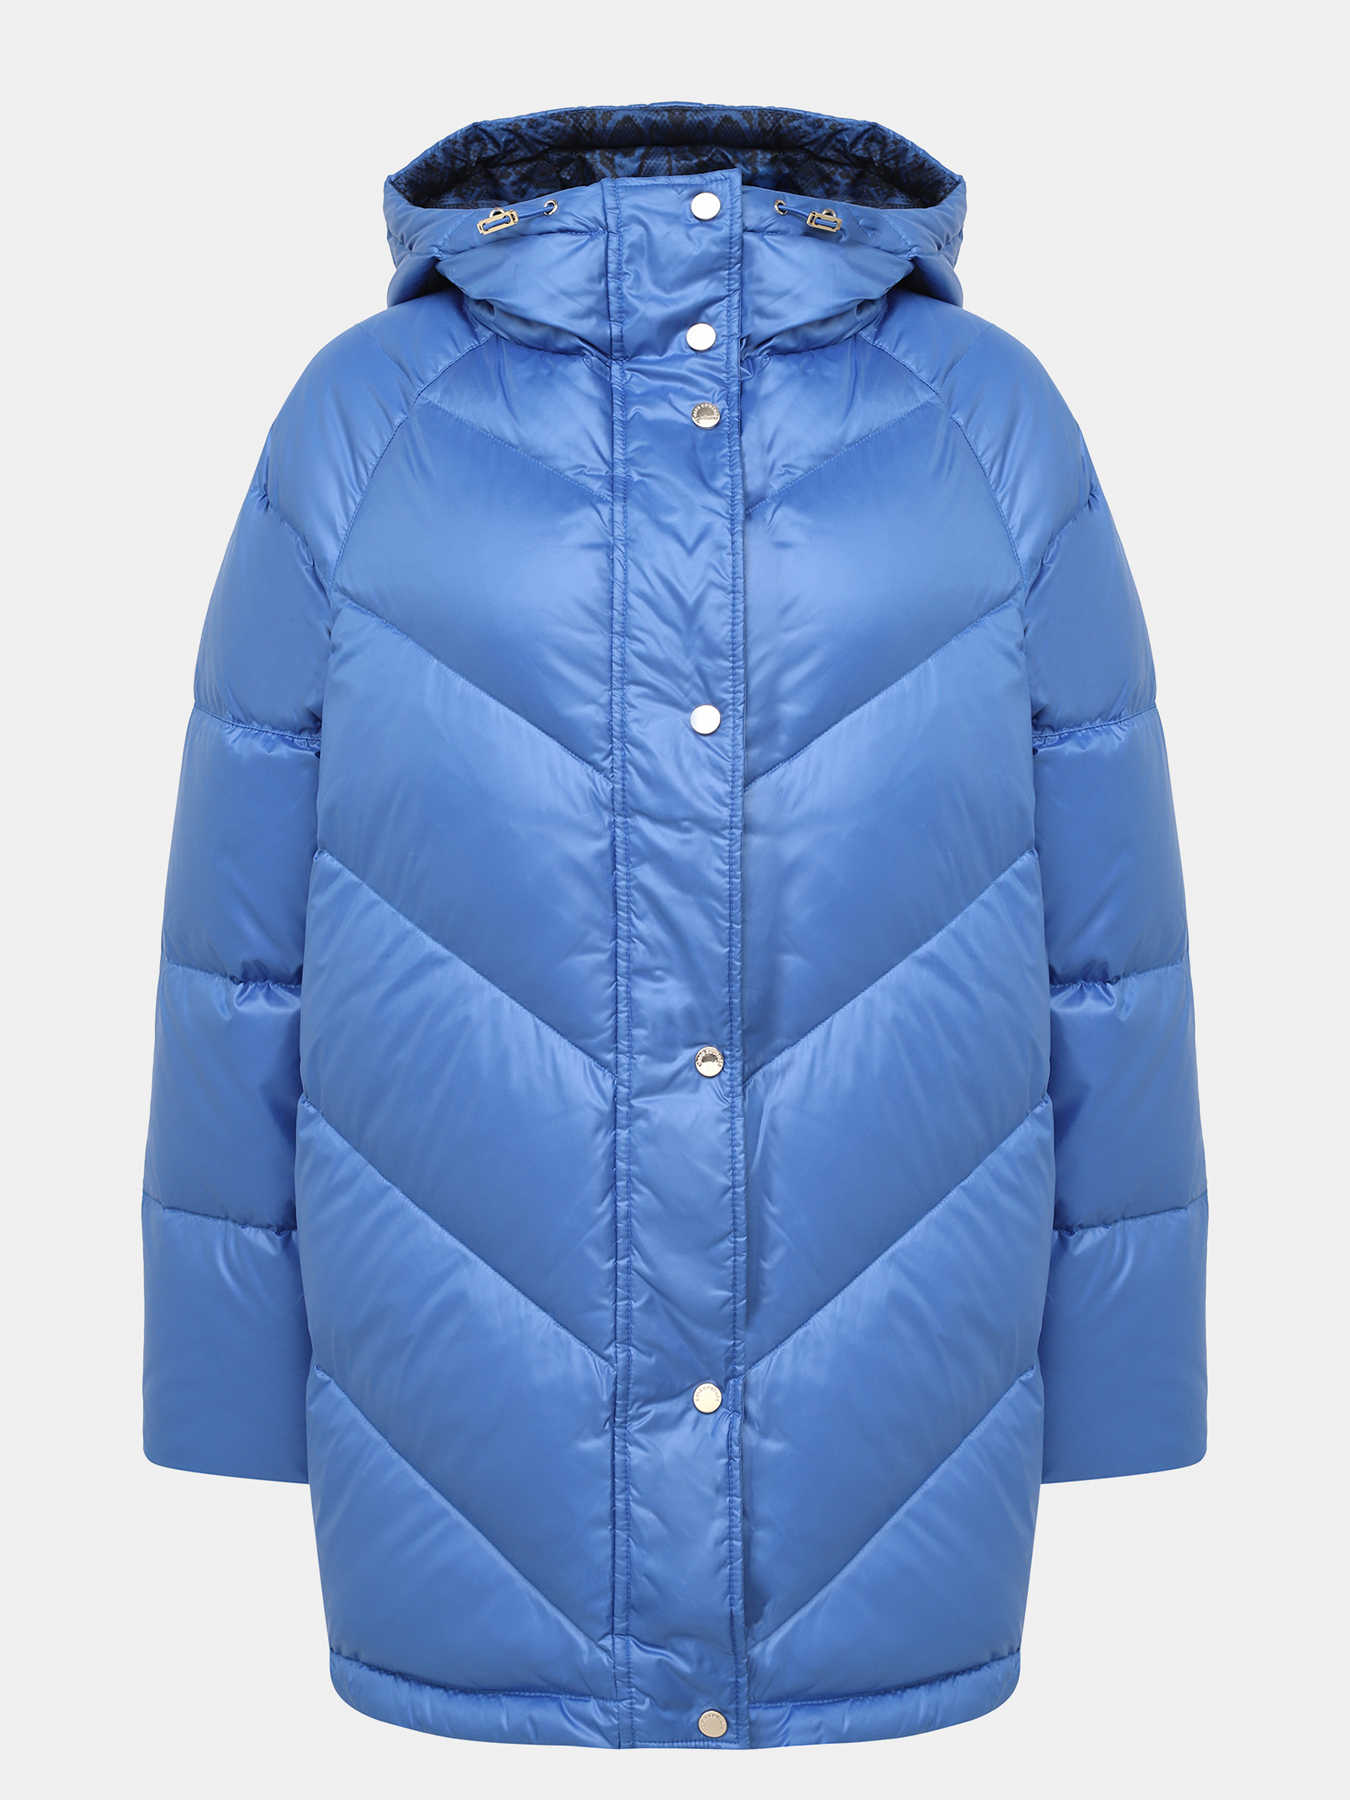 Куртка ORSA Couture 367408-020, цвет синий, размер 40 - фото 1